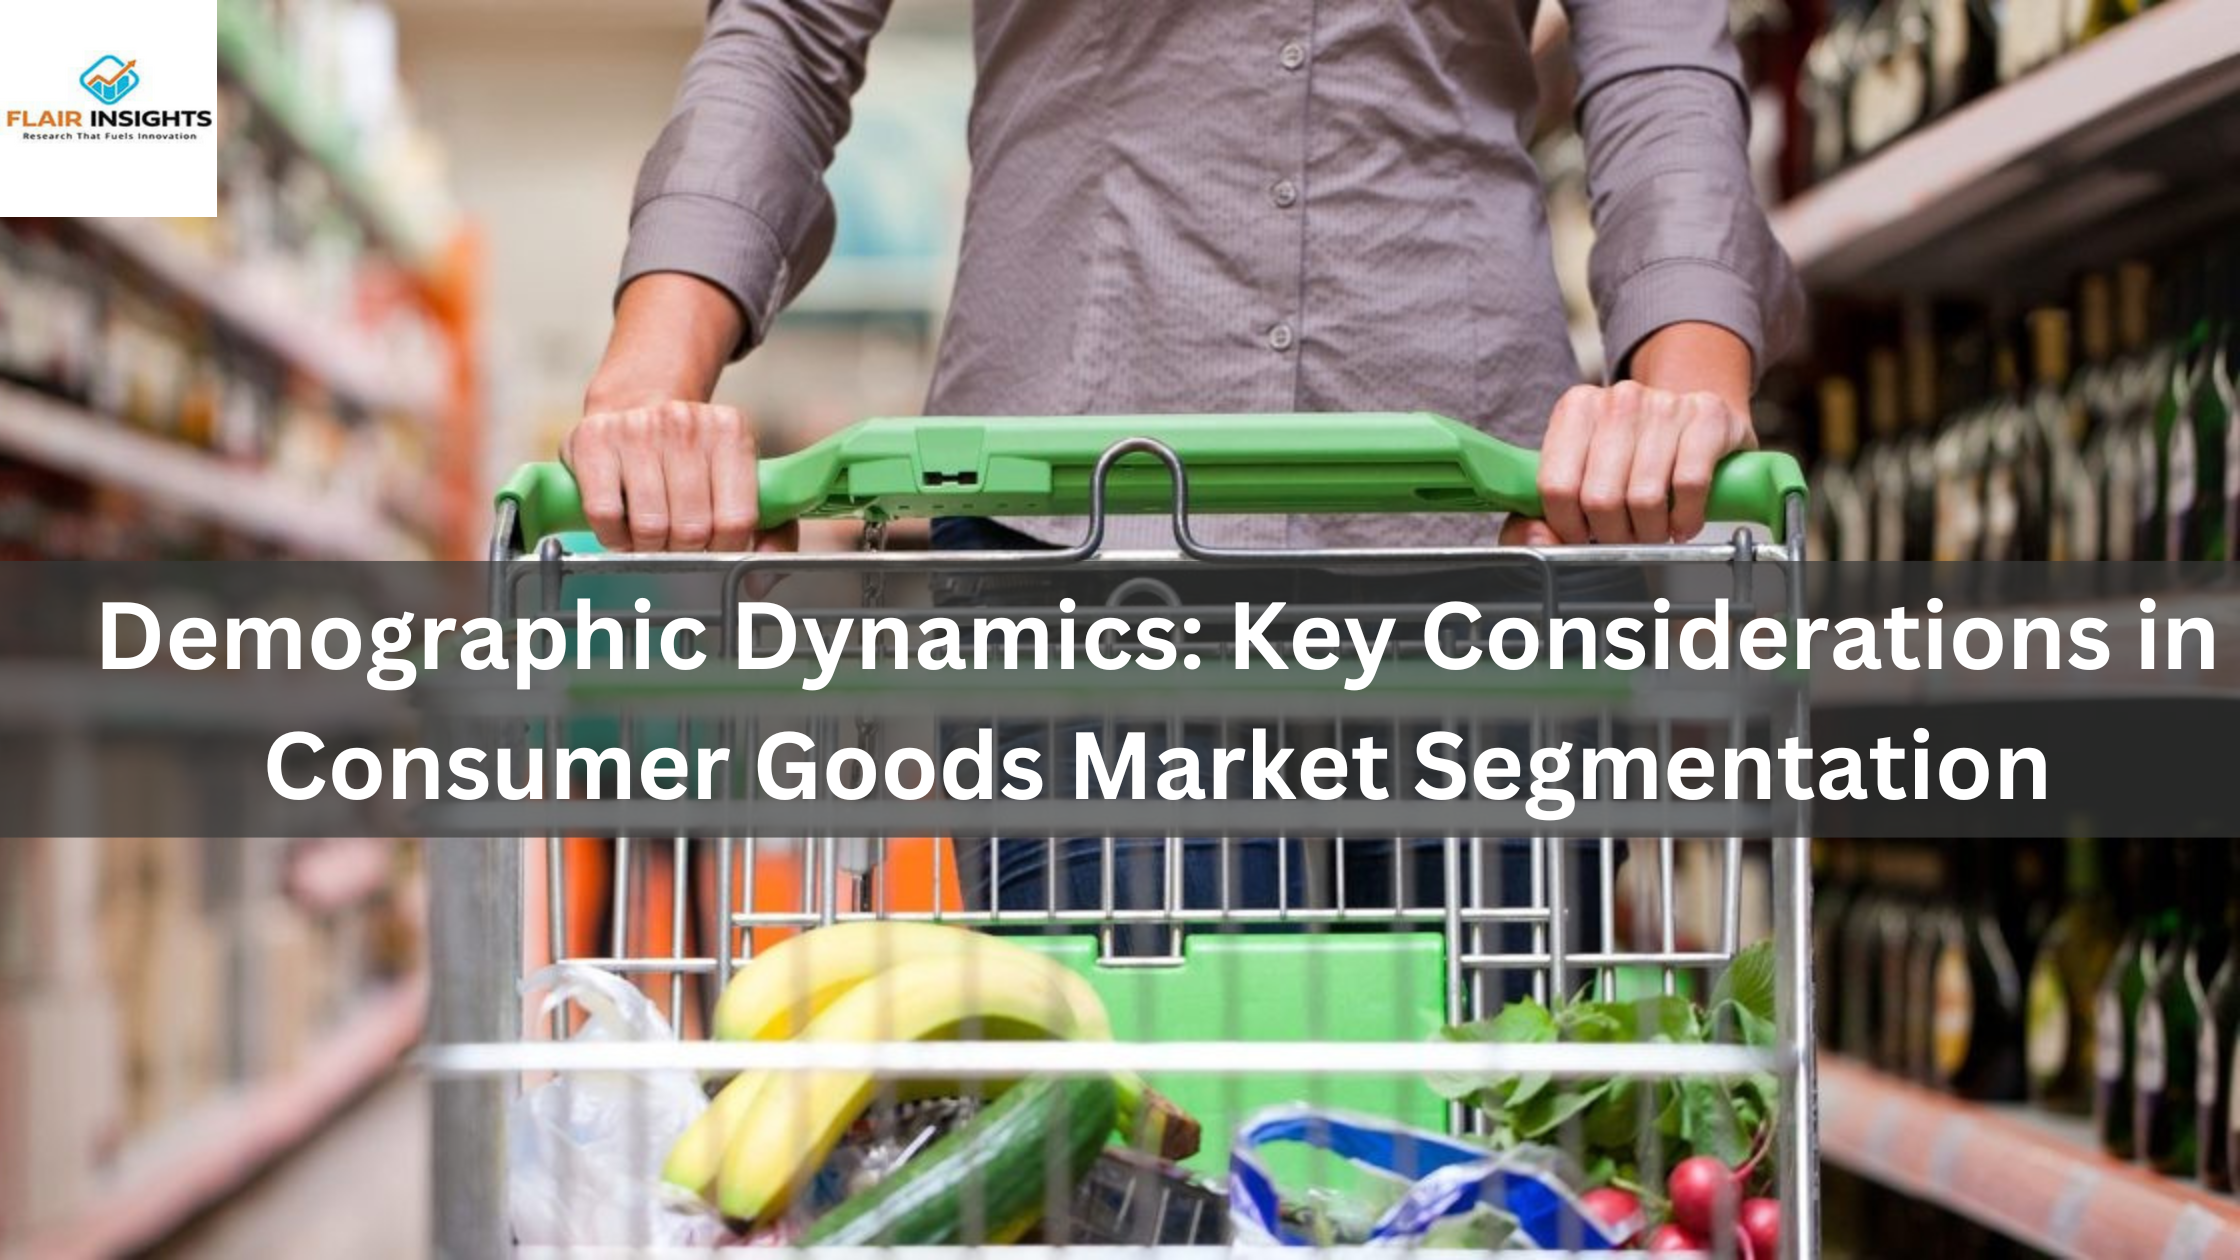 Demographic Dynamics: Key Considerations in Consumer Goods Market Segmentation